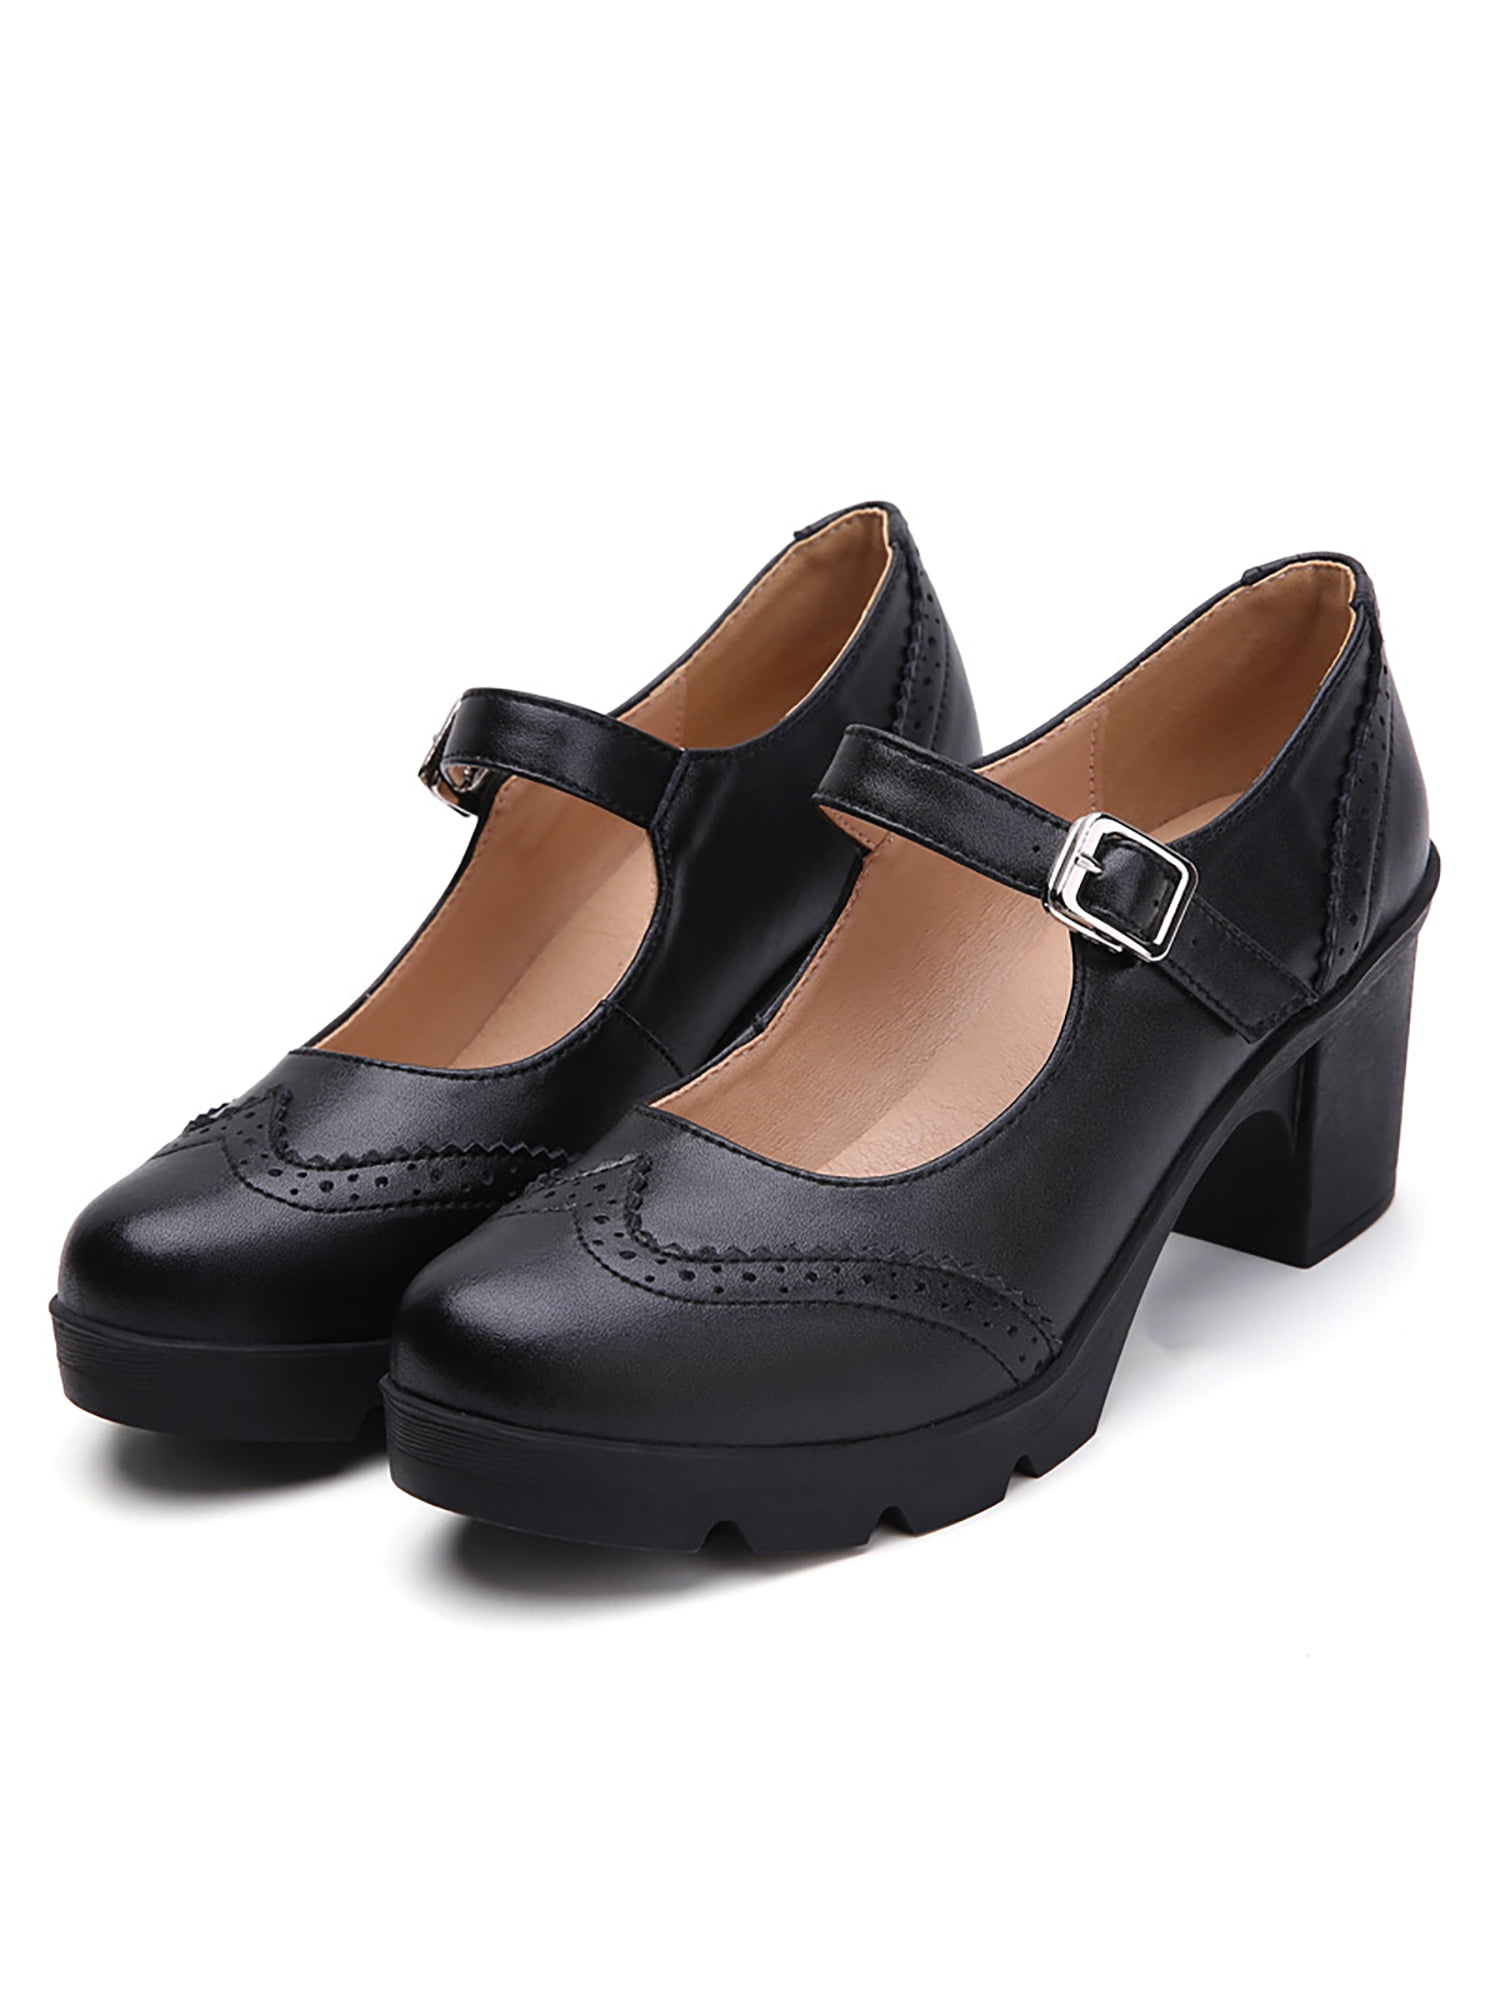 Girls/Kids Black Strap School Shoes Casual Brogue Pumps Dolly Flat C8-UK 3 